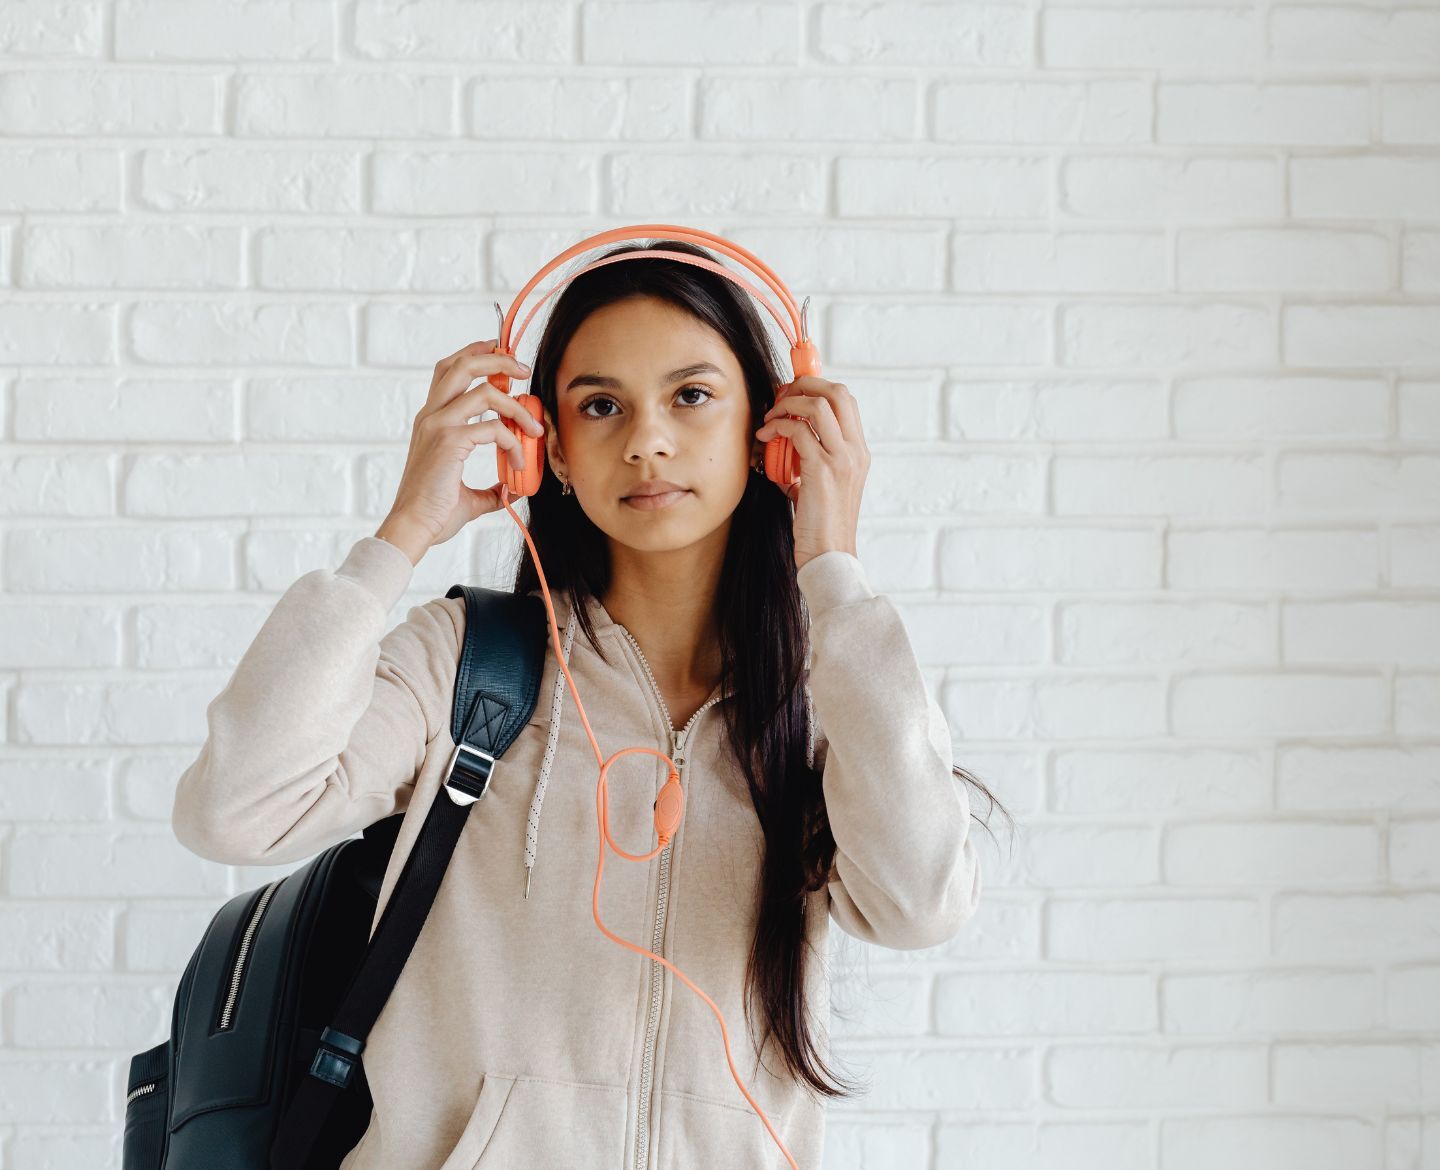 teenage girl wearing headphones